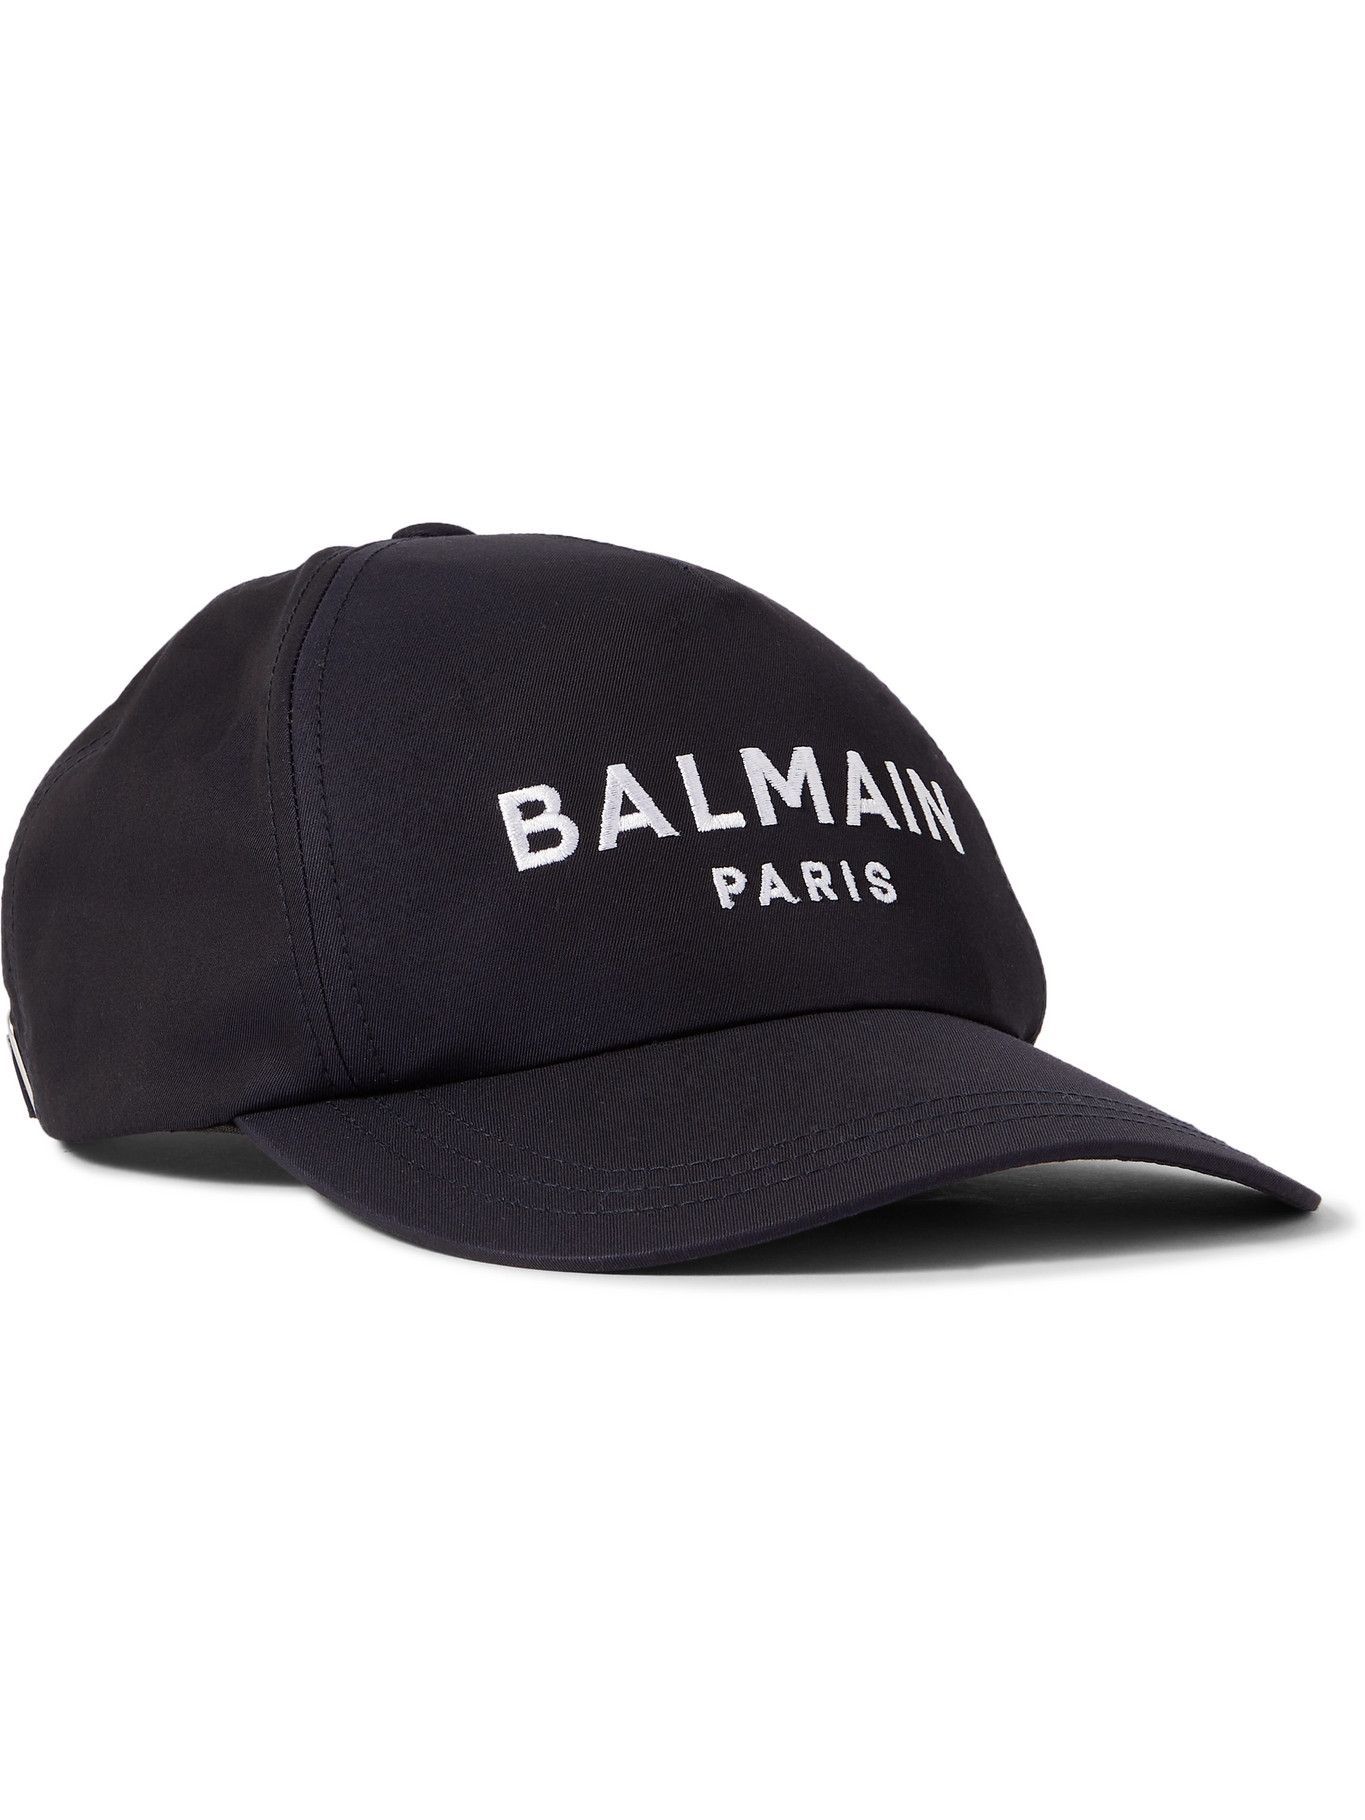 BALMAIN - Logo-Embroidered Cotton-Twill Baseball Cap Balmain